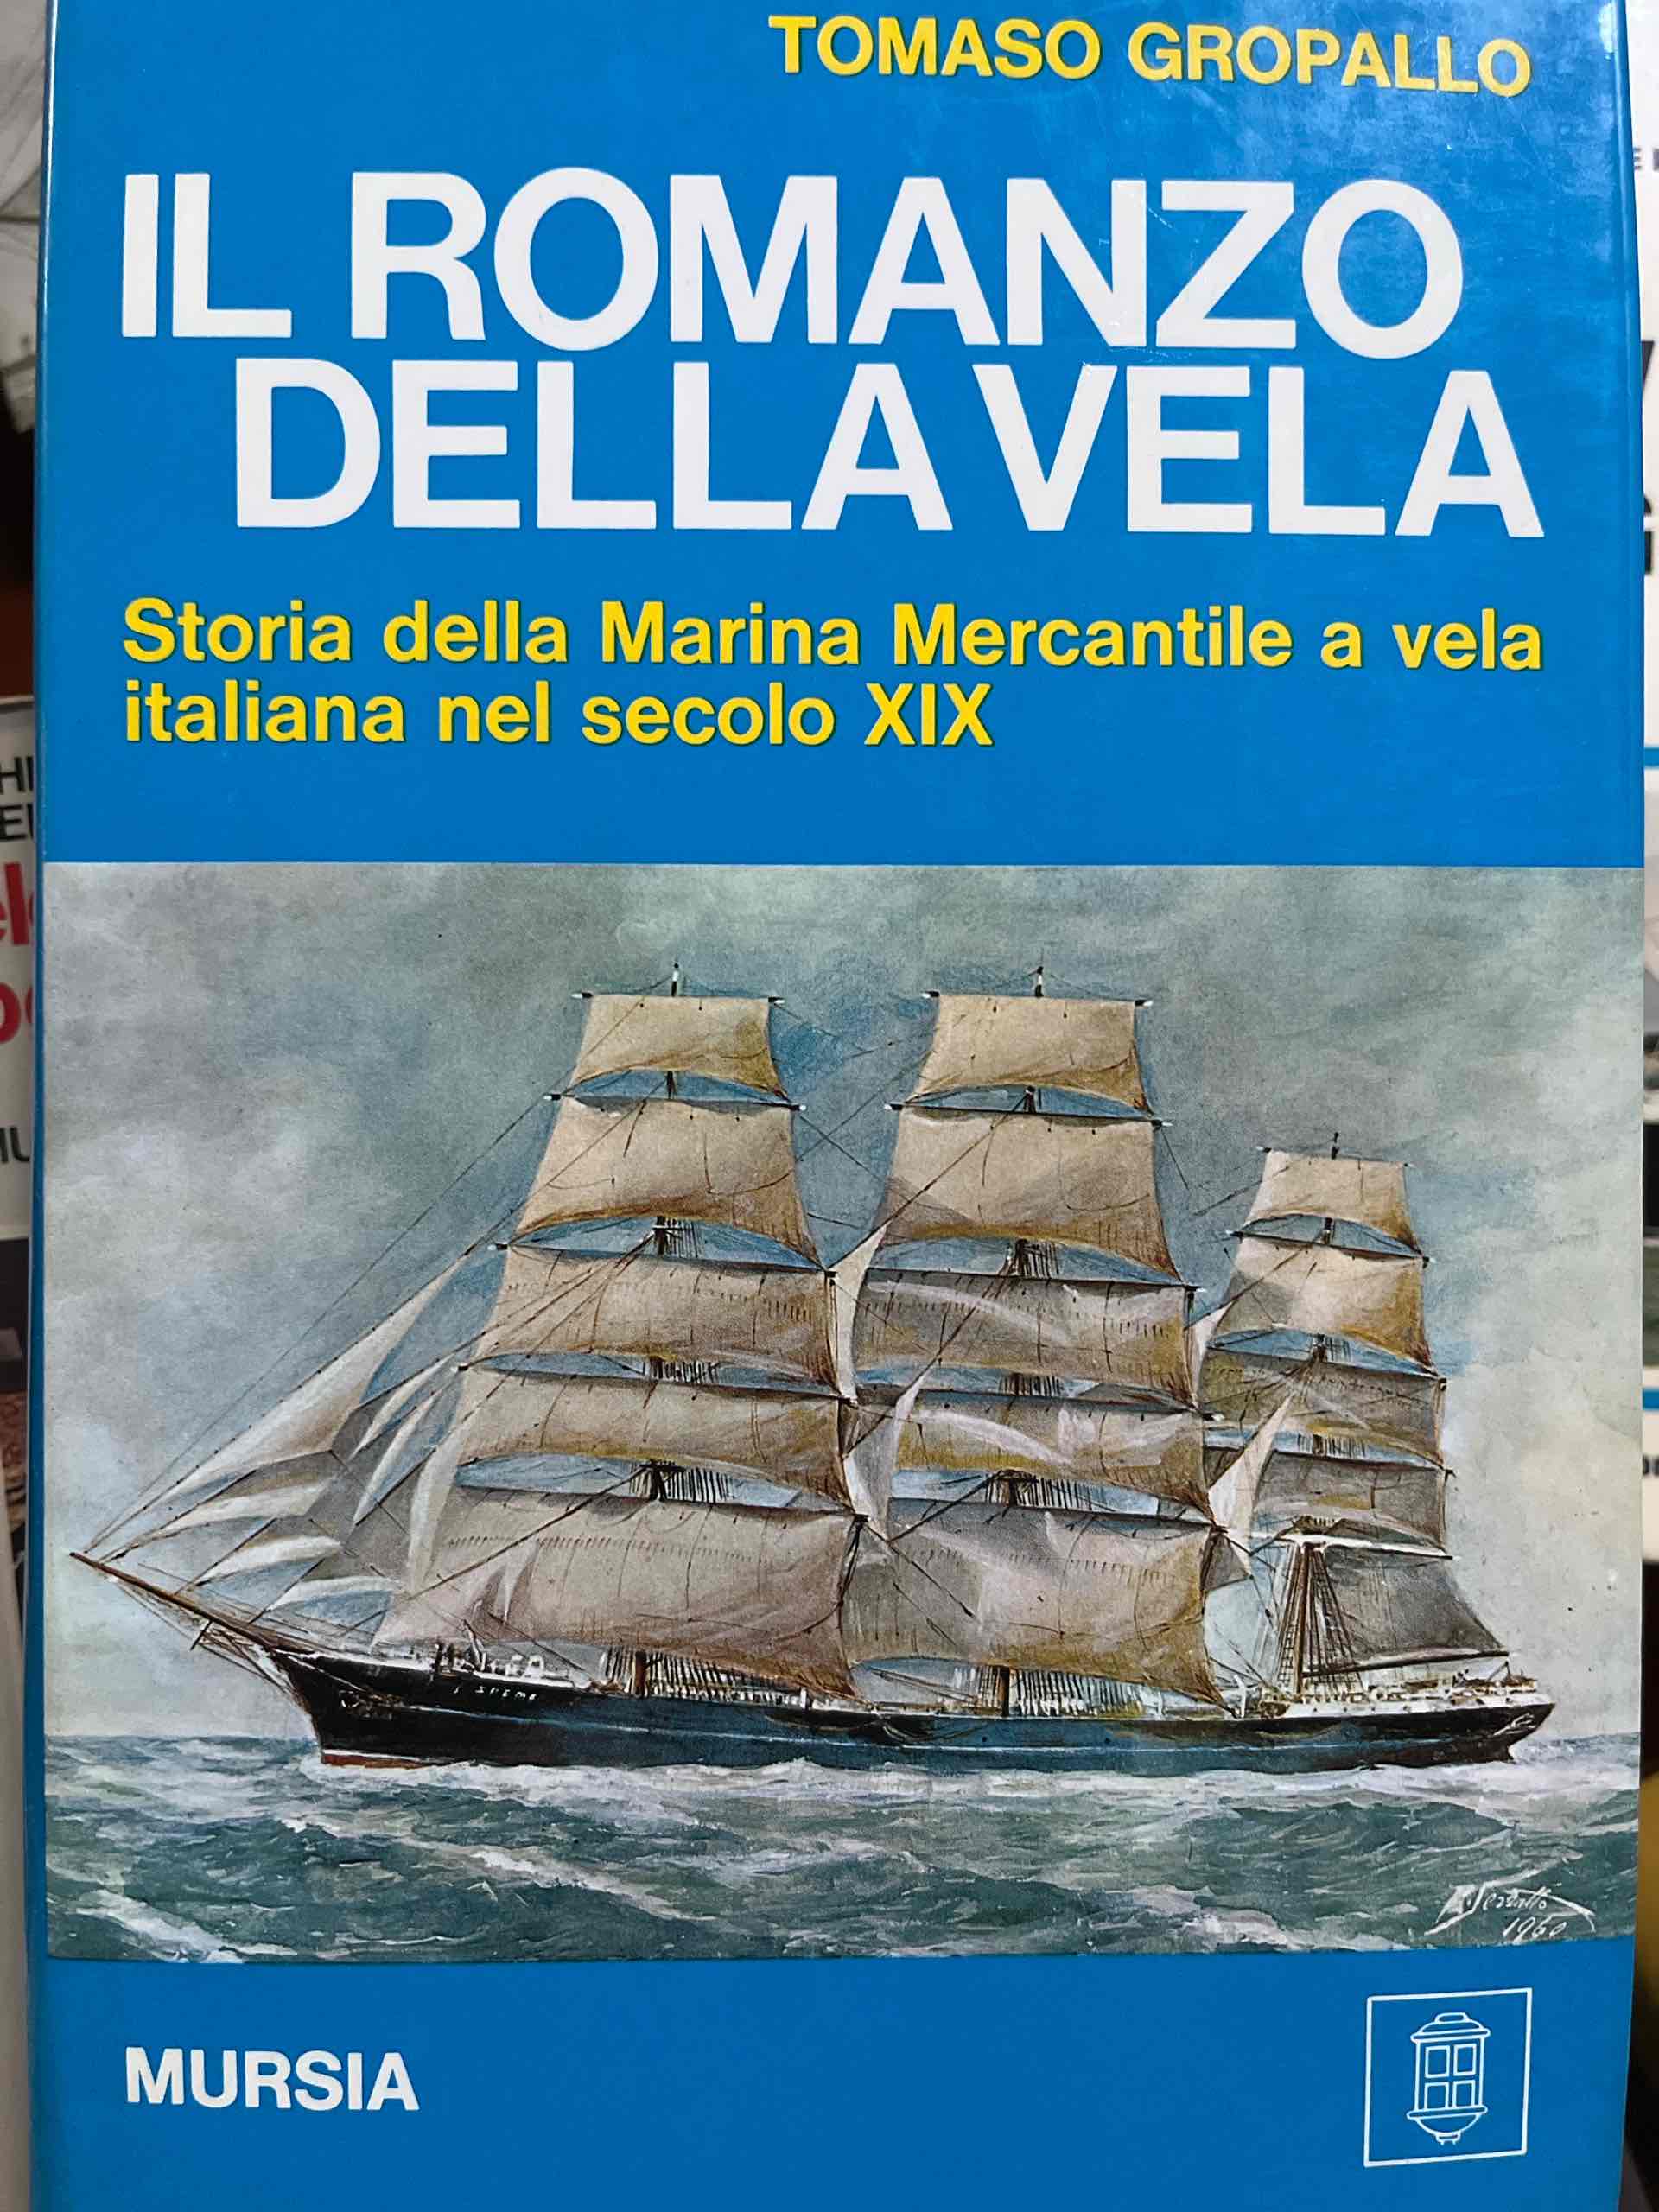 Storia della marina mercantile italiana nel XIX sec